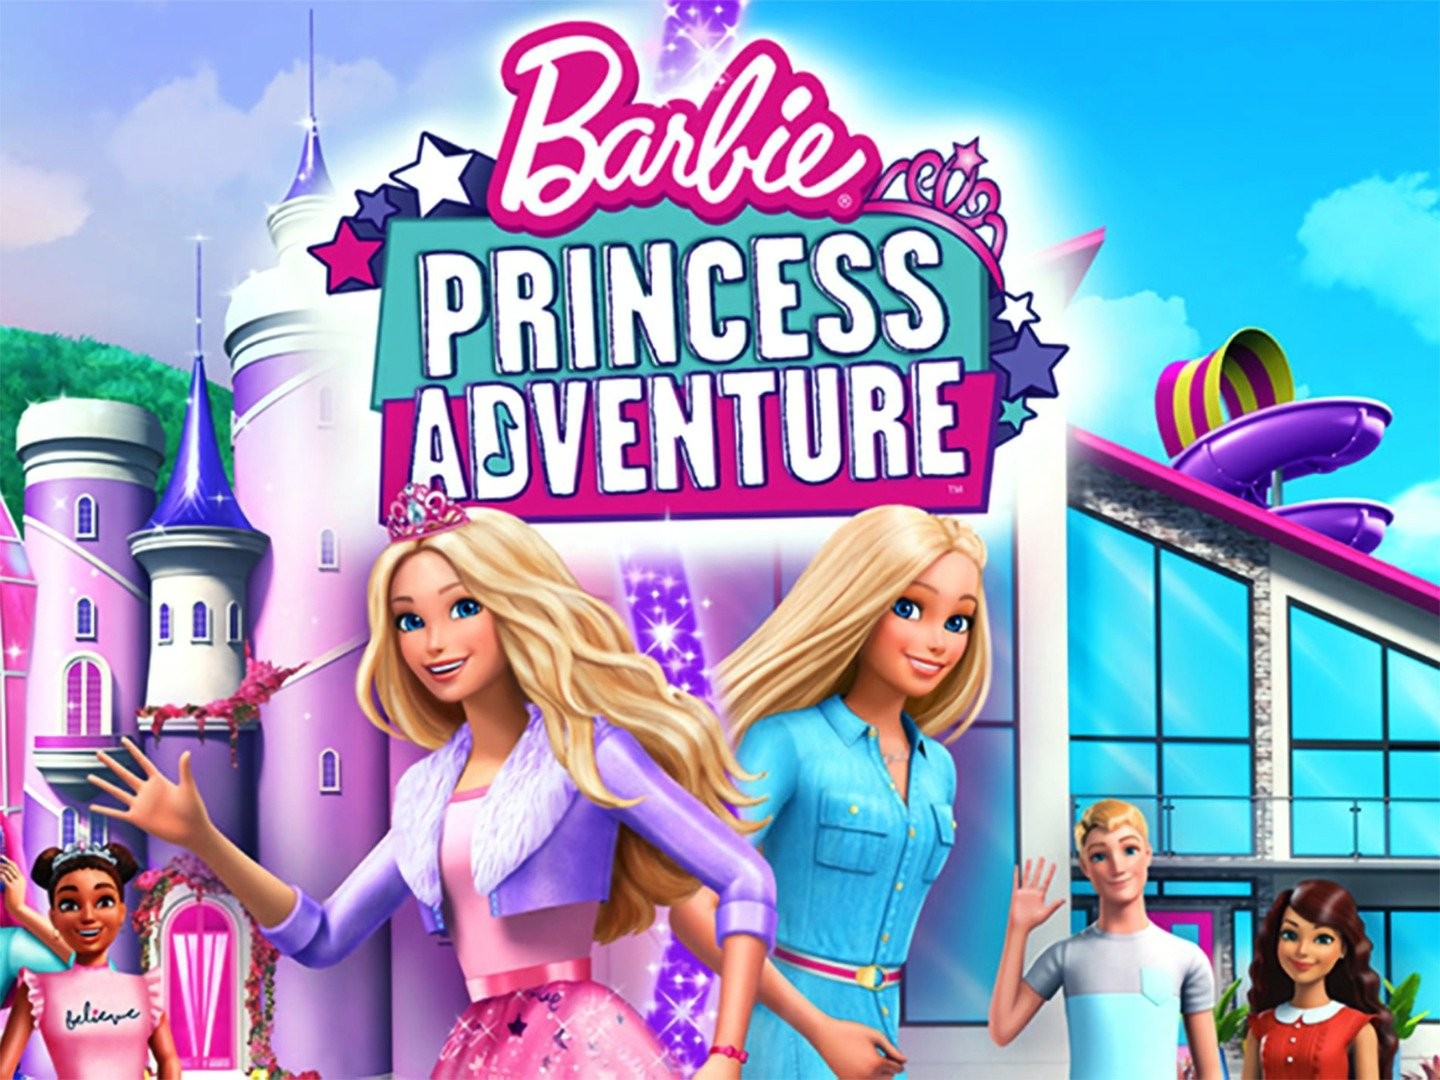 Barbie Movies Wallpaper Barbie as the Princess and the Pauper wallpaper  Barbie  princess Barbie dress Princess barbie dolls